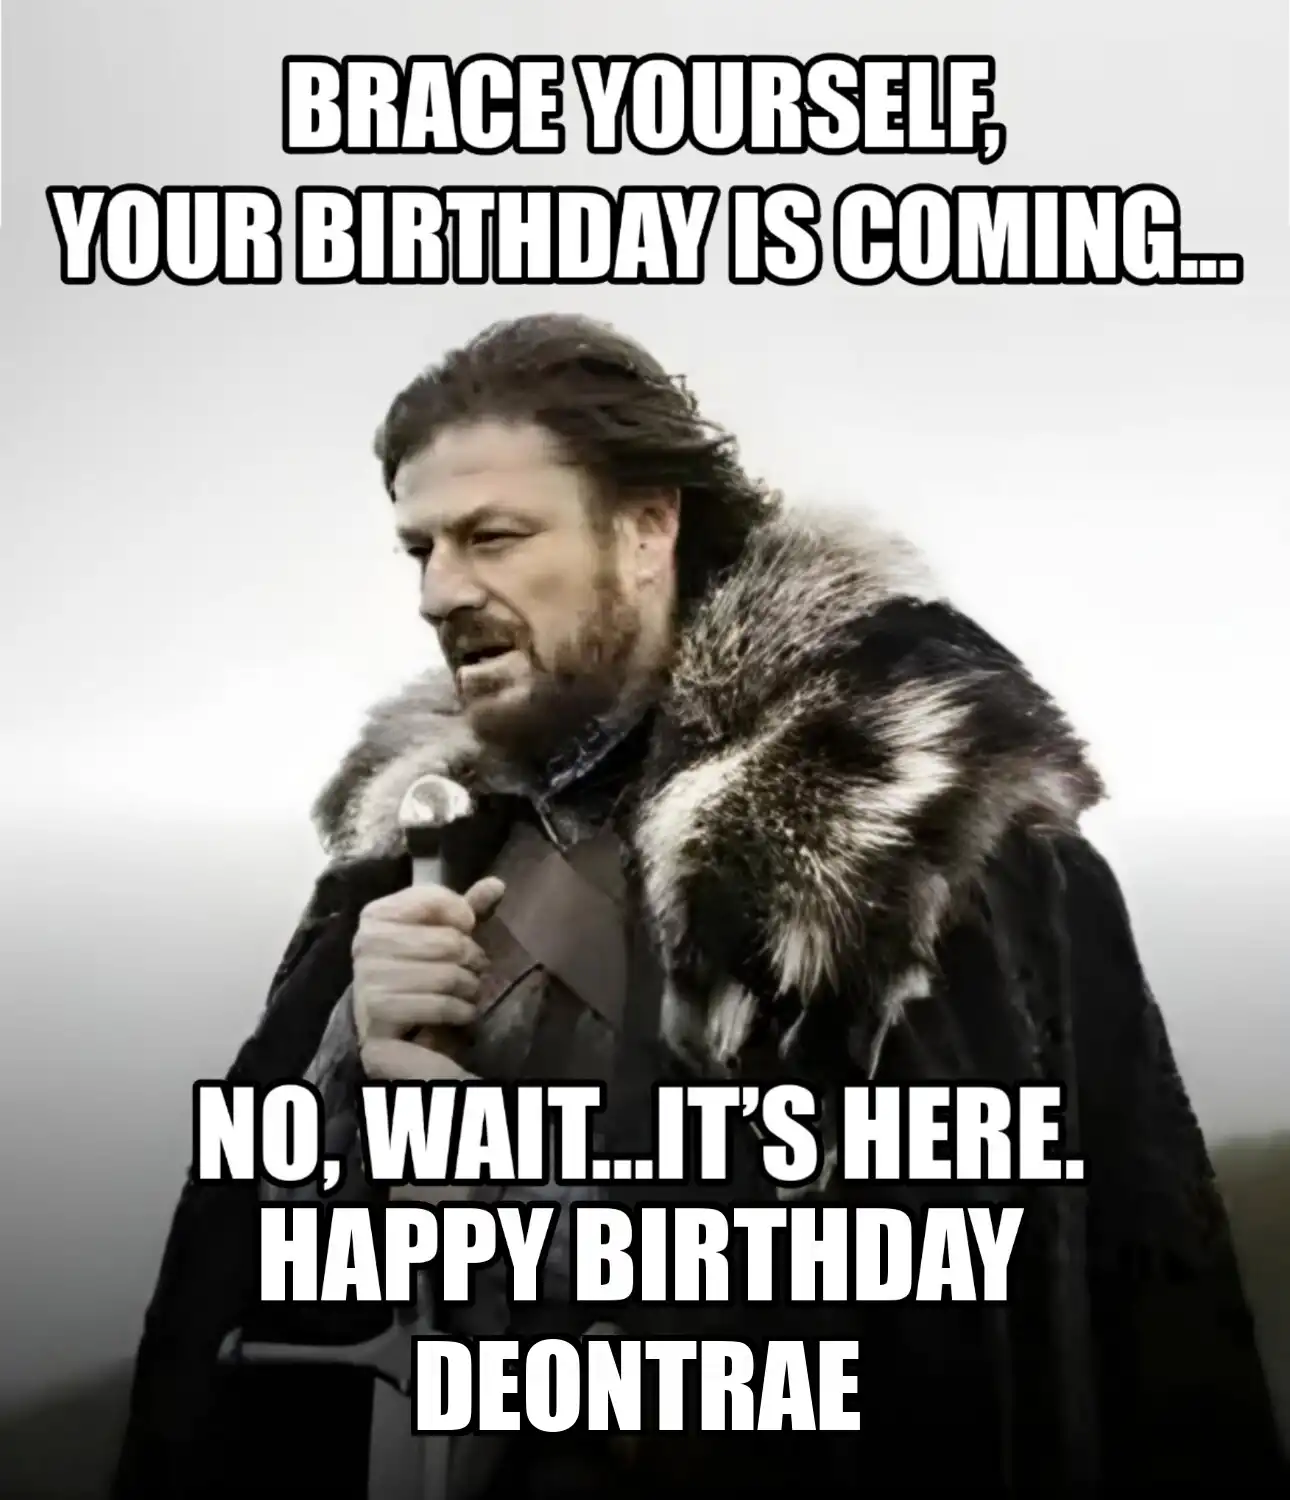 Happy Birthday Deontrae Brace Yourself Your Birthday Is Coming Meme